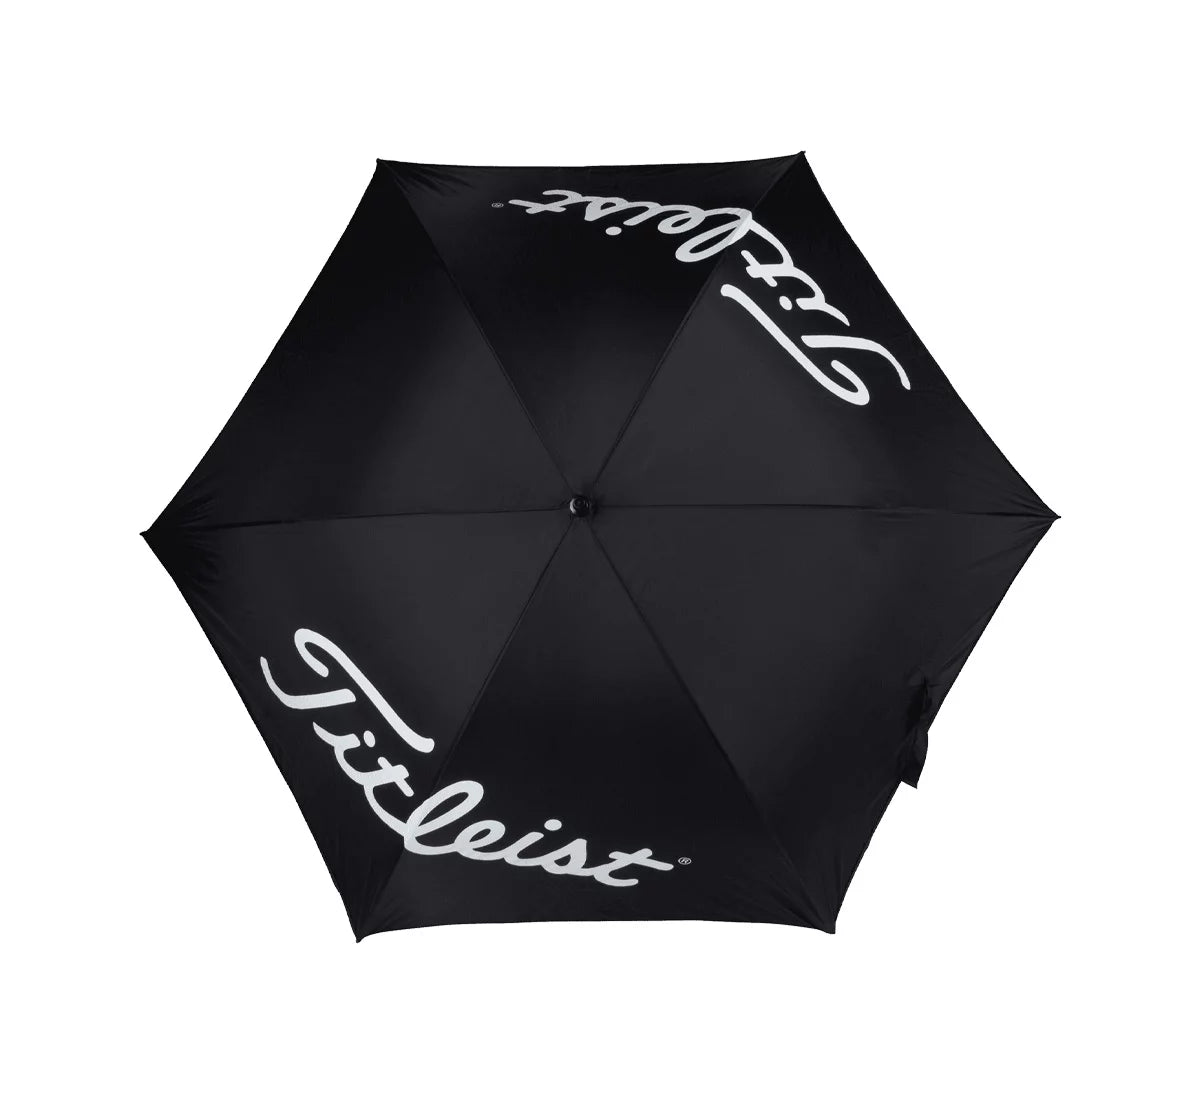 Titleist Umbrella